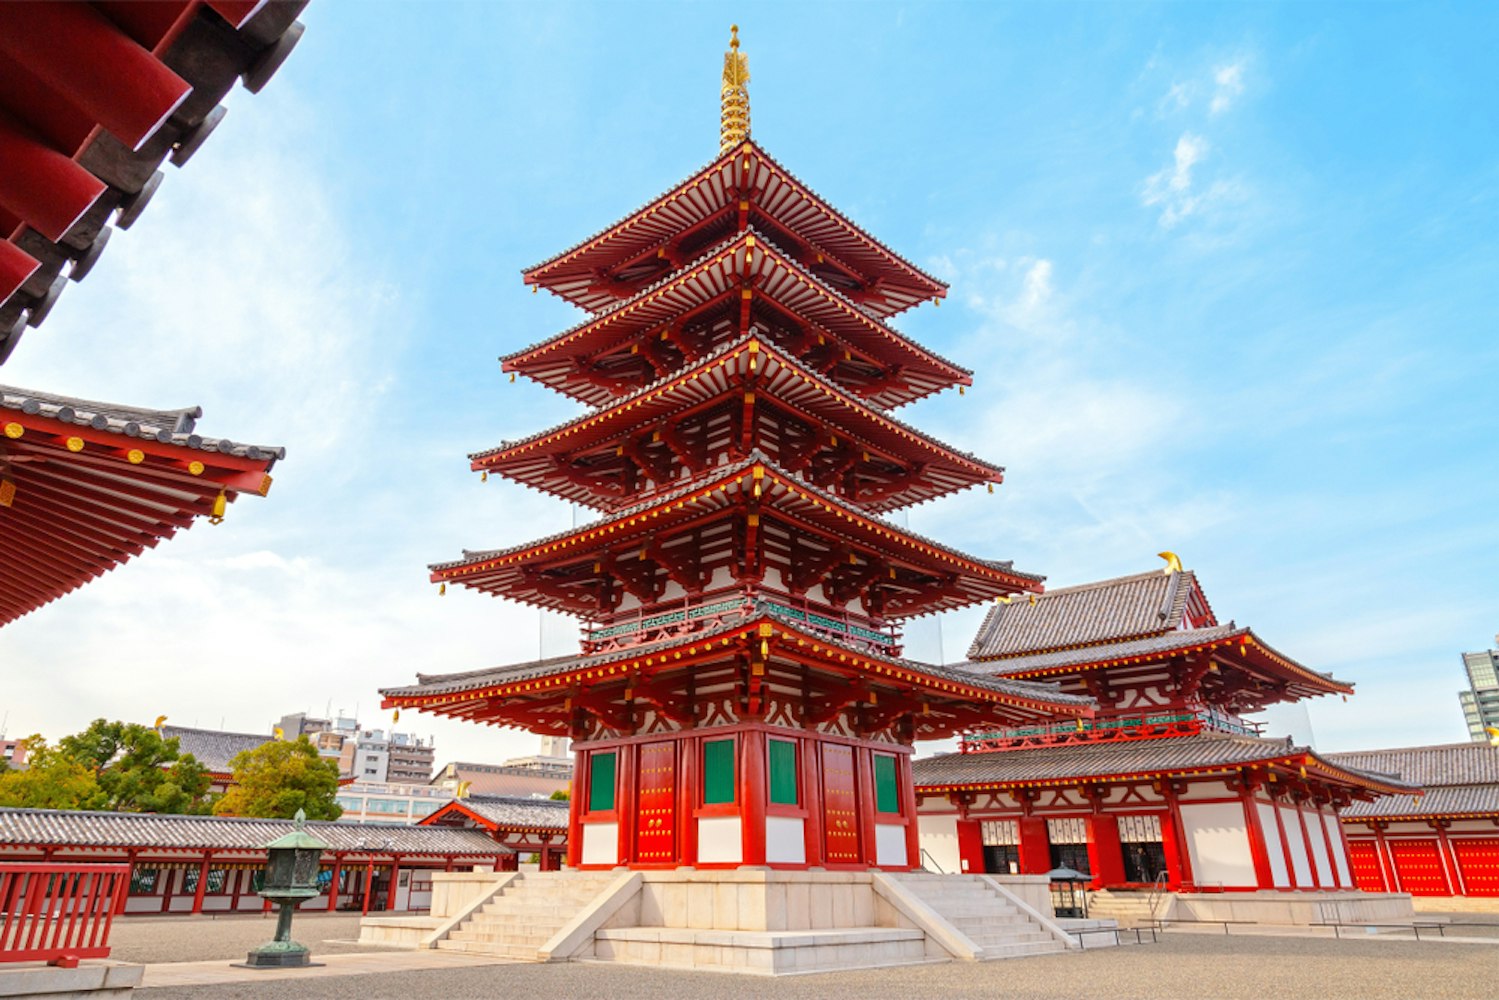 The Five-Story Pagoda